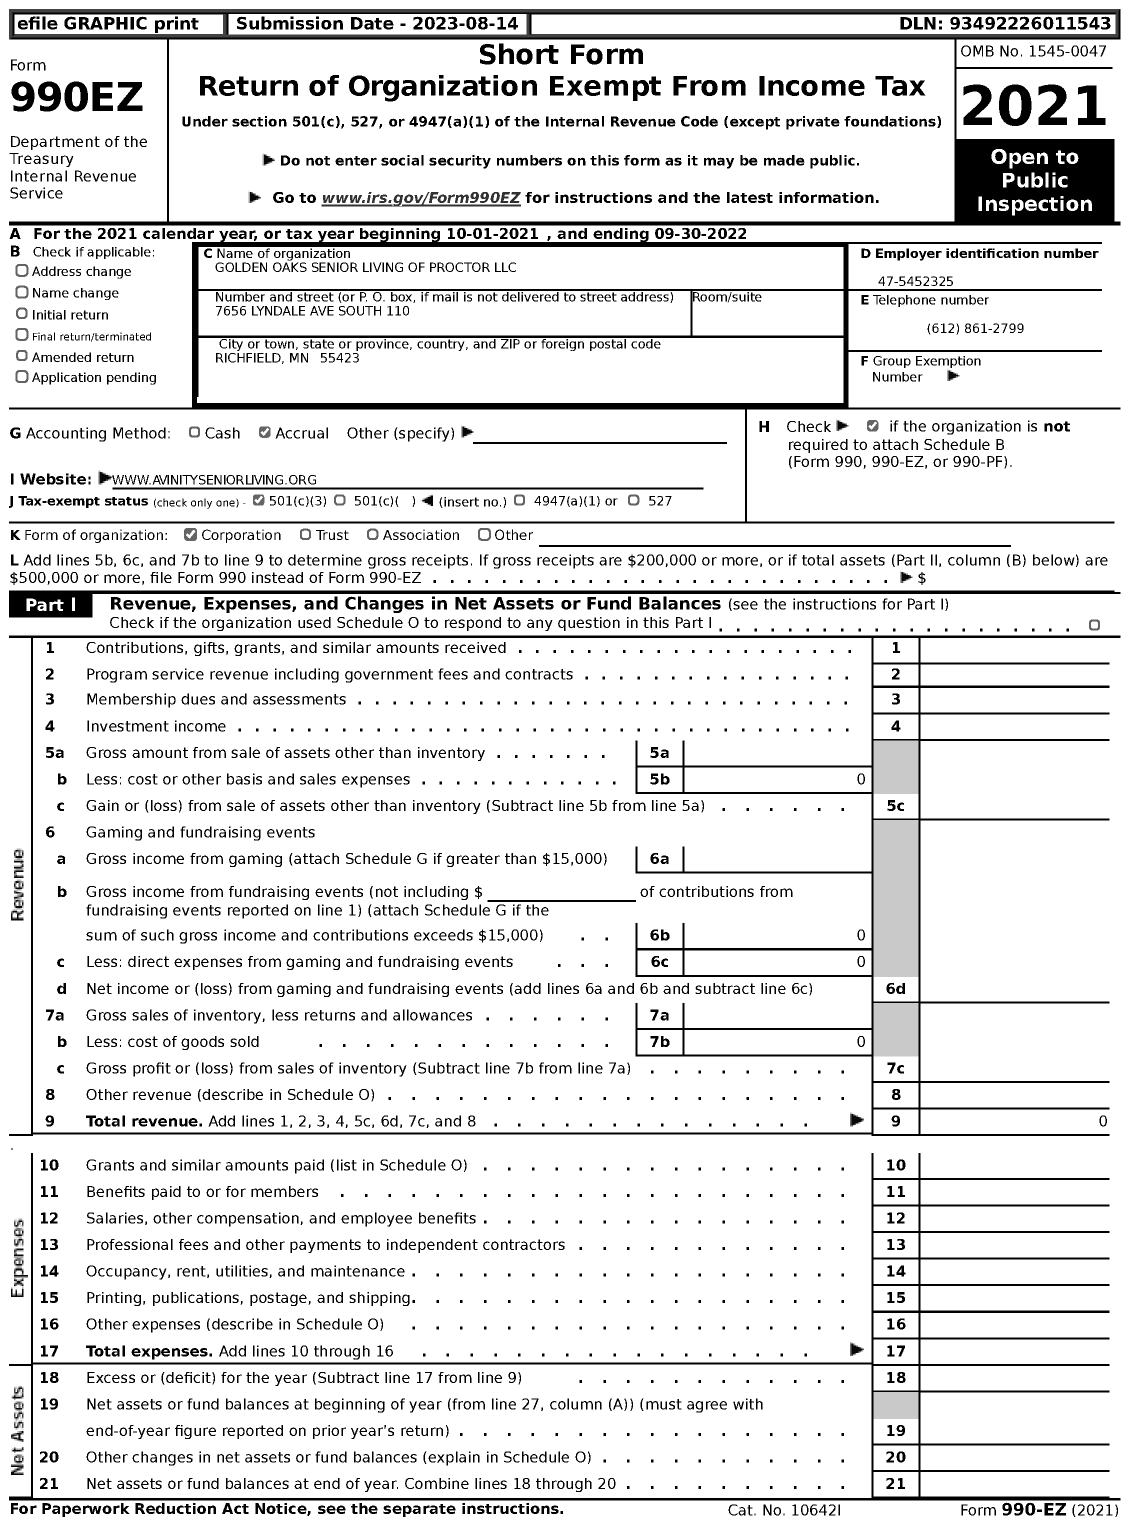 Image of first page of 2021 Form 990EZ for Golden Oaks Senior Living of Proctor LLC